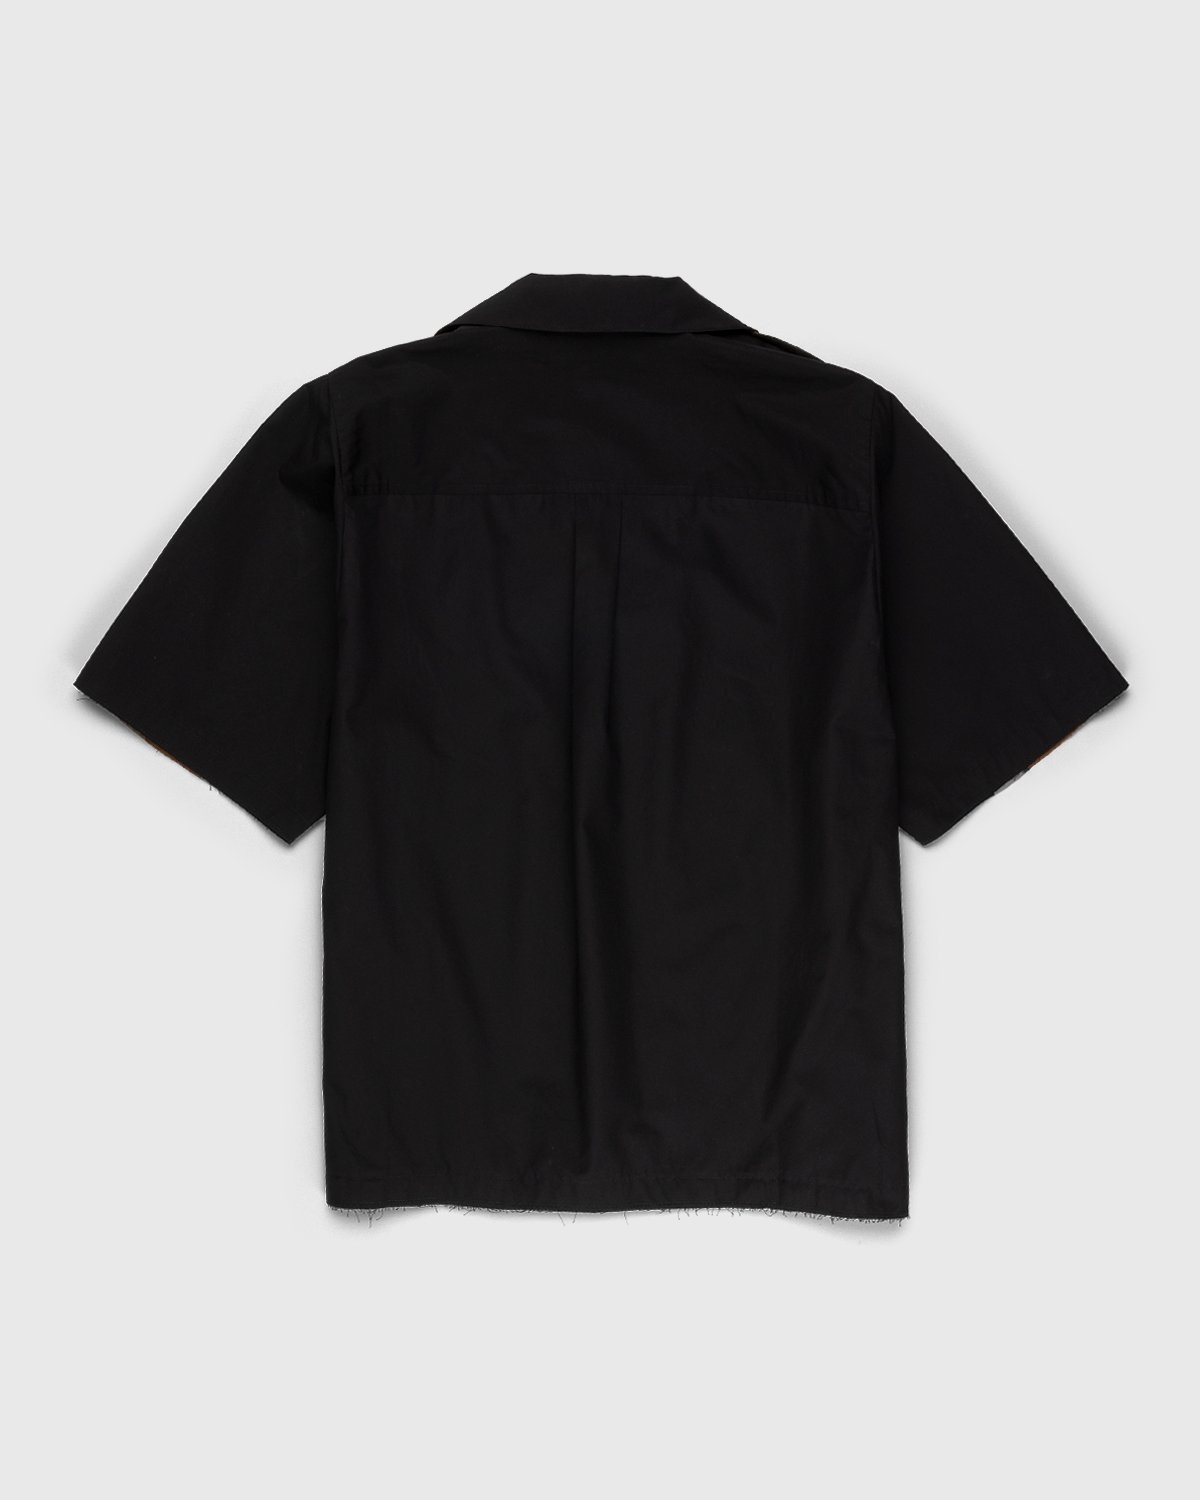 Marni – 50s Camo Mixed Material Bowling Shirt Soft Beige - Shortsleeve Shirts - Beige - Image 2